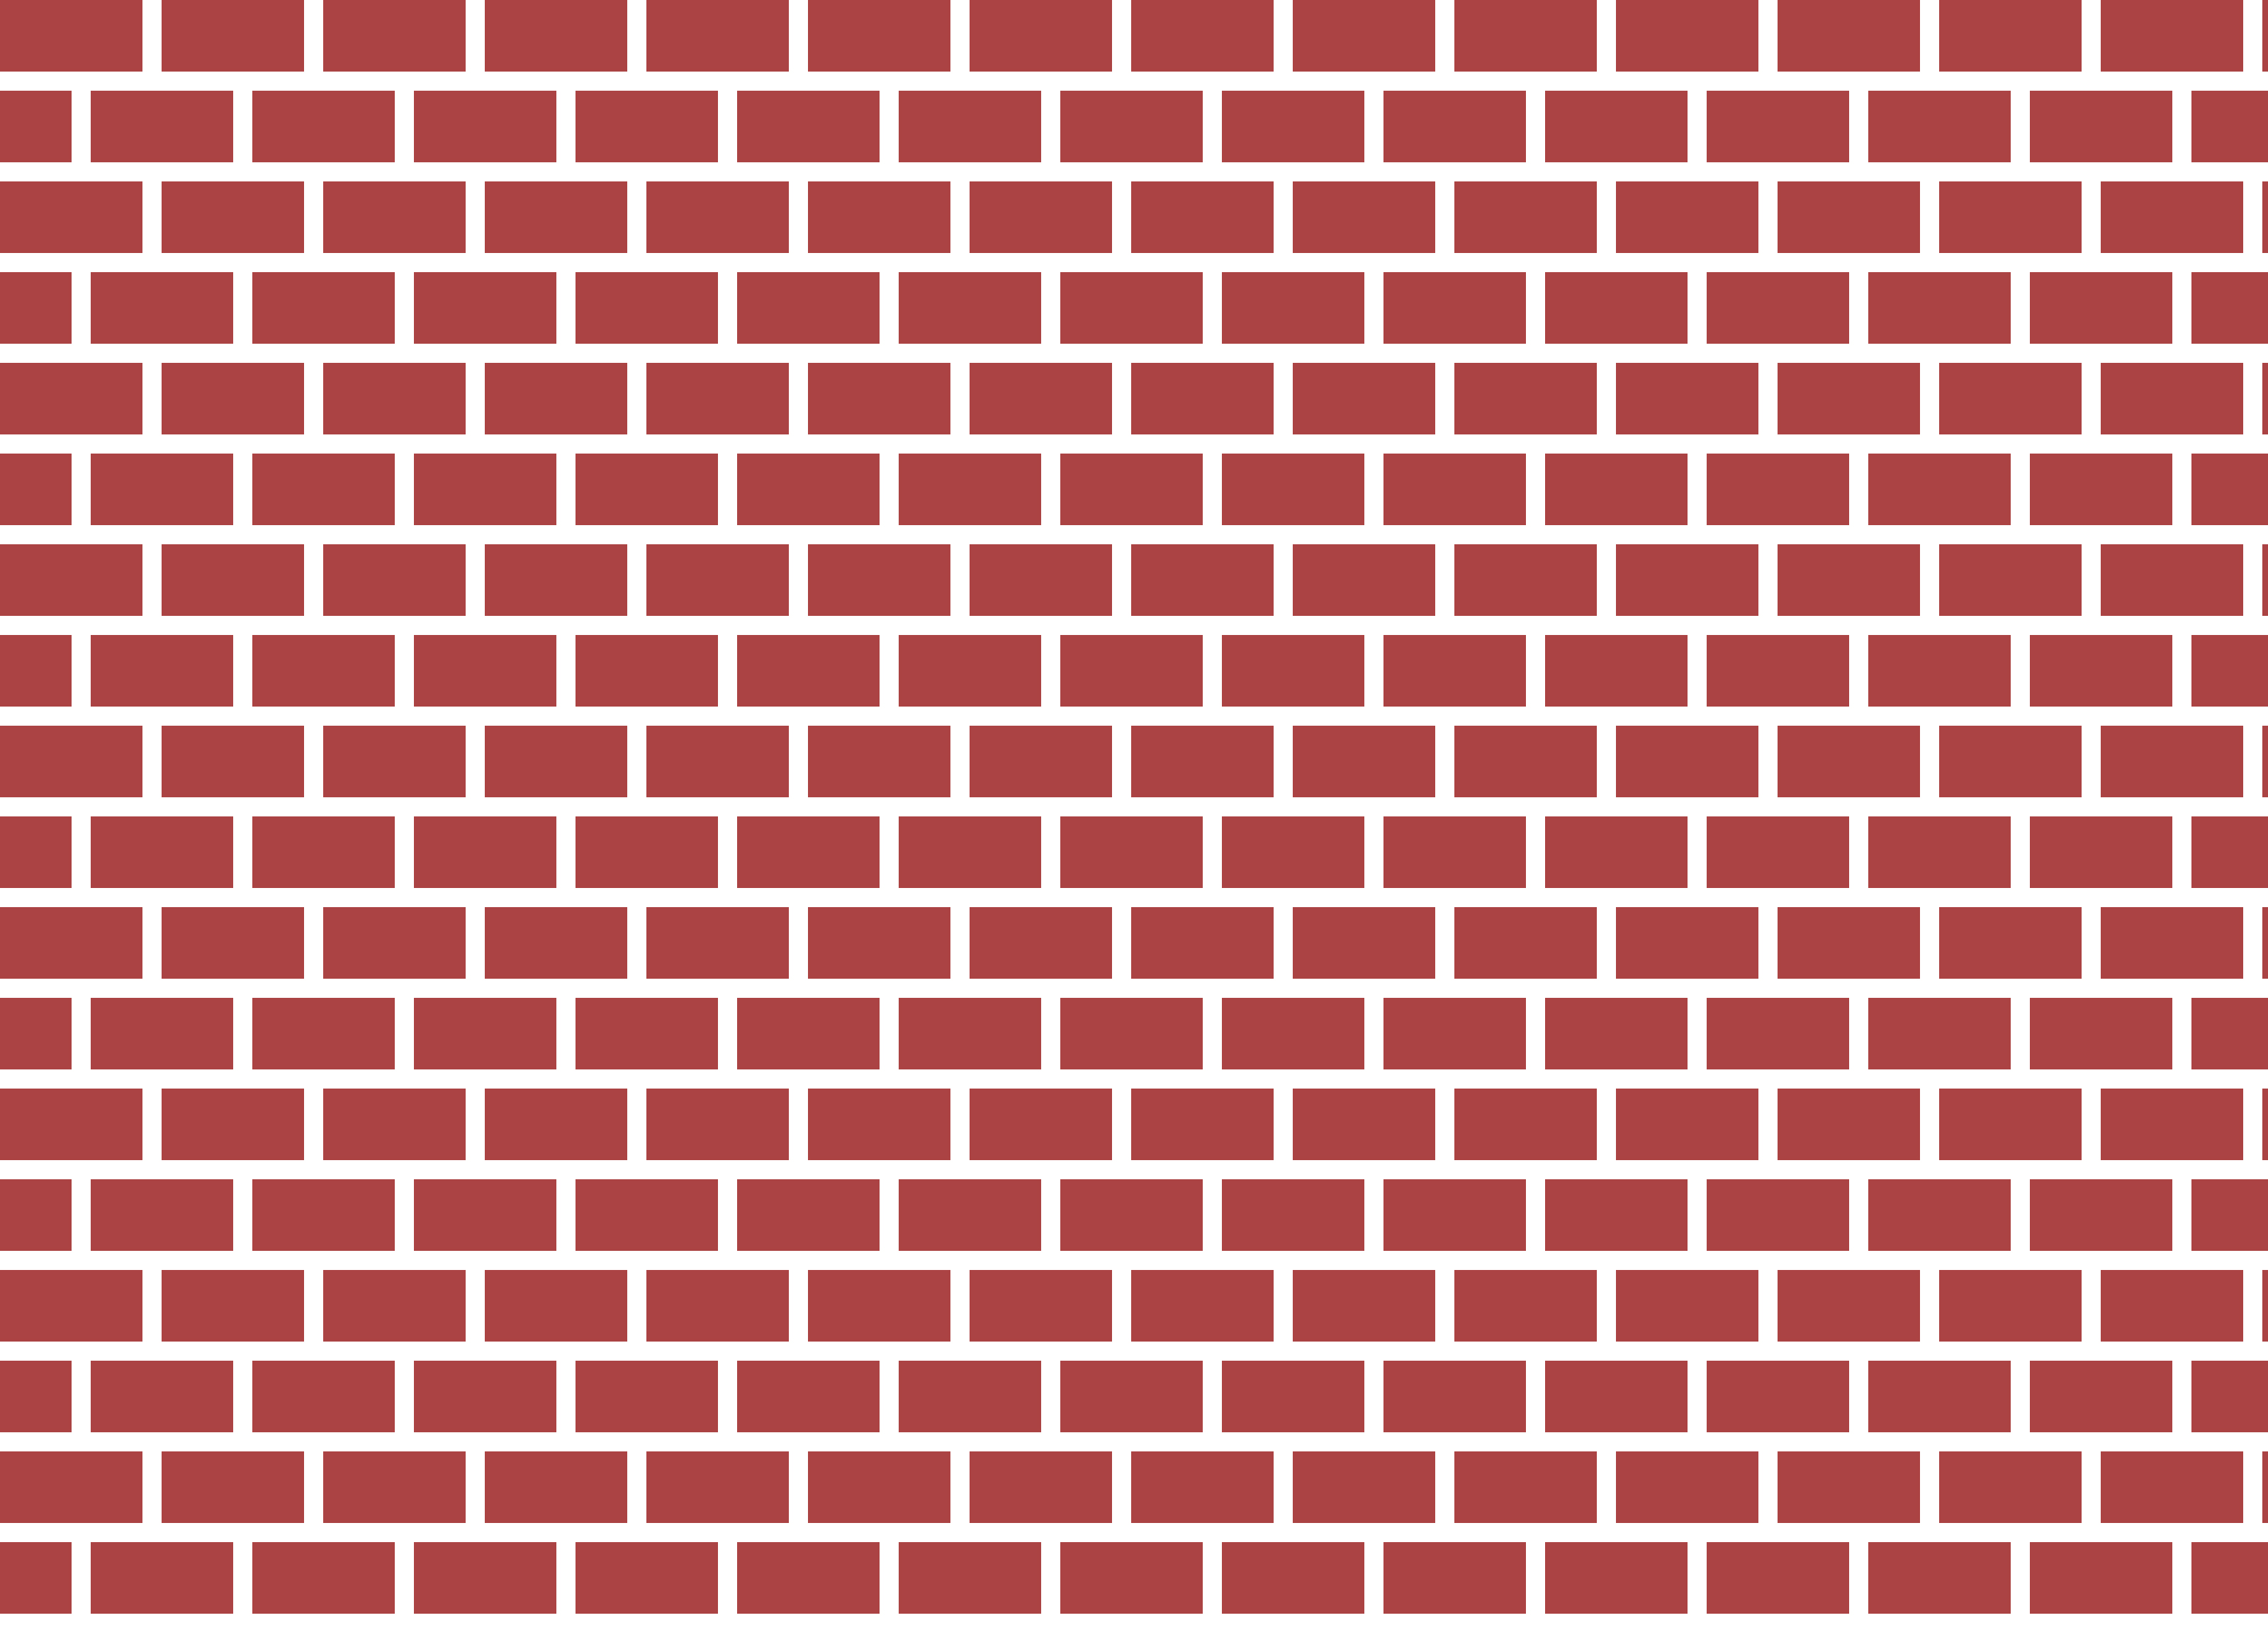 Brick Wall | Free Images at Clker.com - vector clip art online, royalty